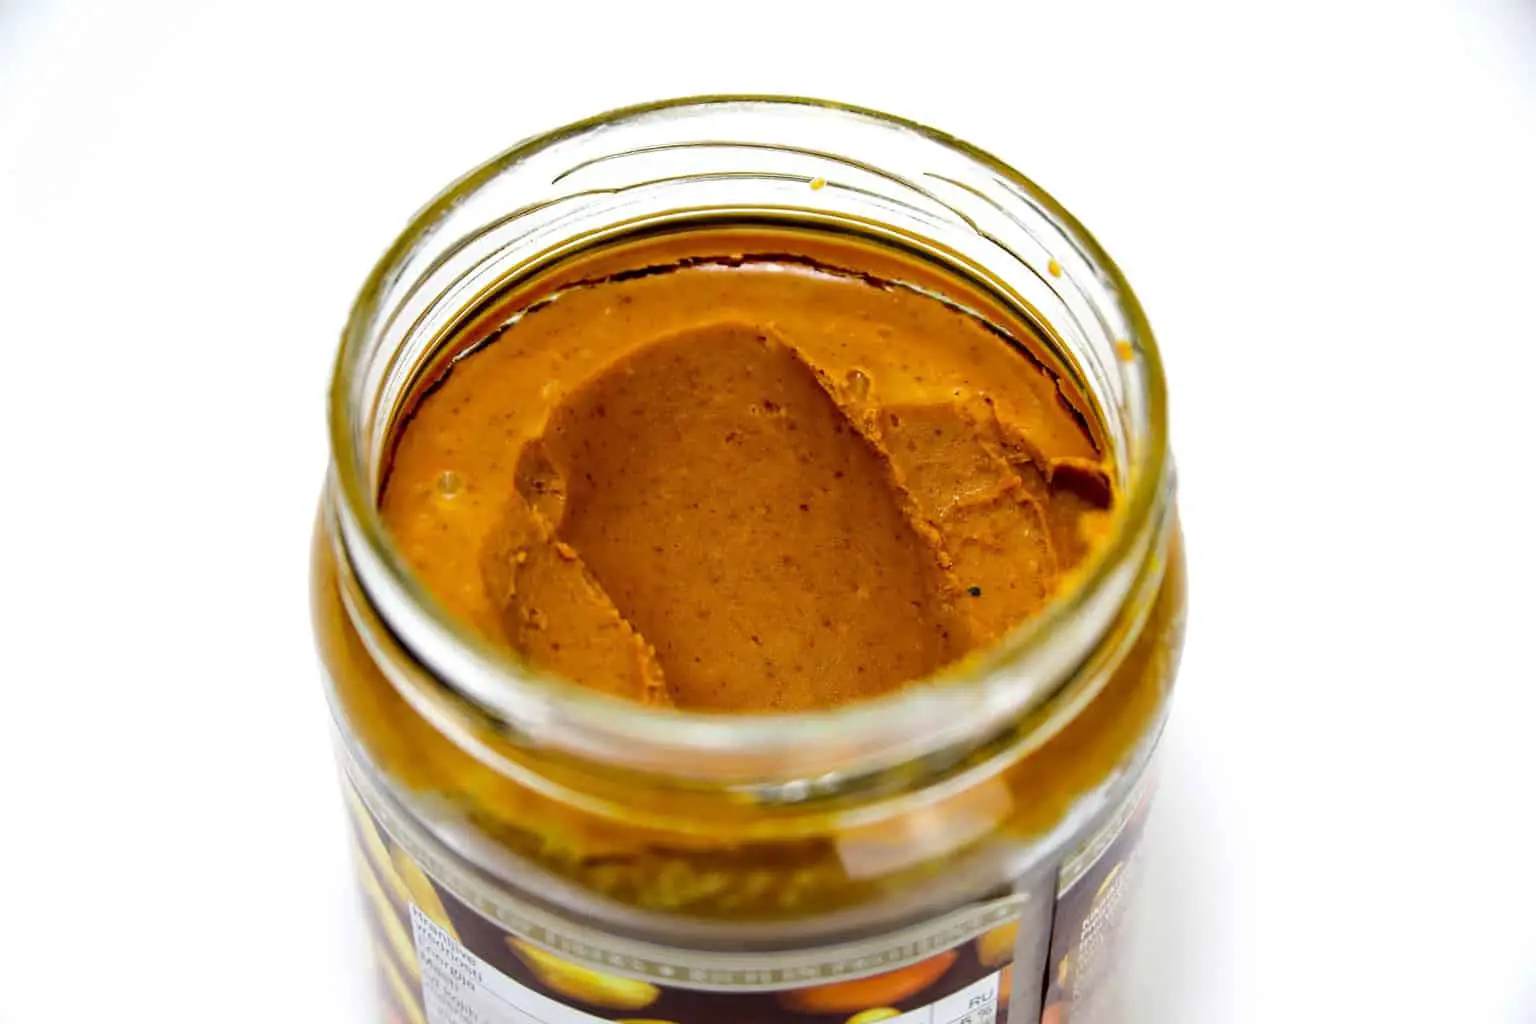 Close up of a peanut butter jar